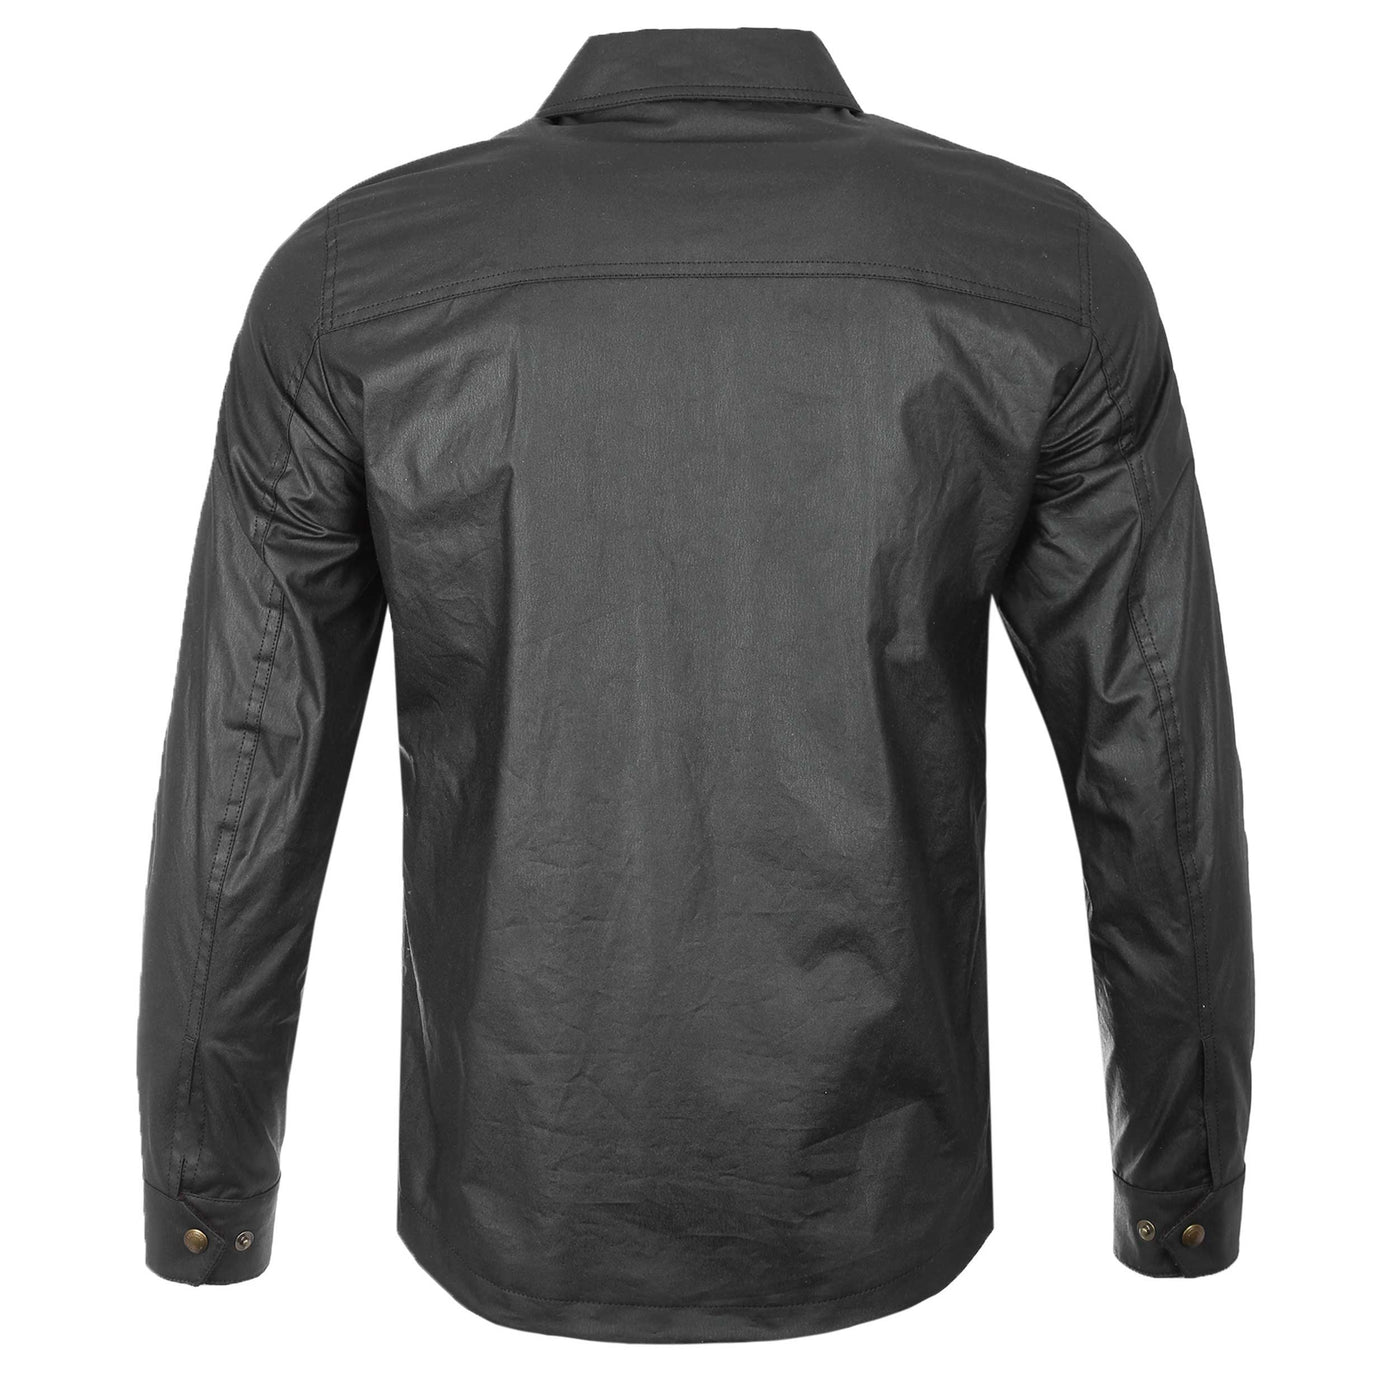 Belstaff Tour Overshirt Jacket in Black